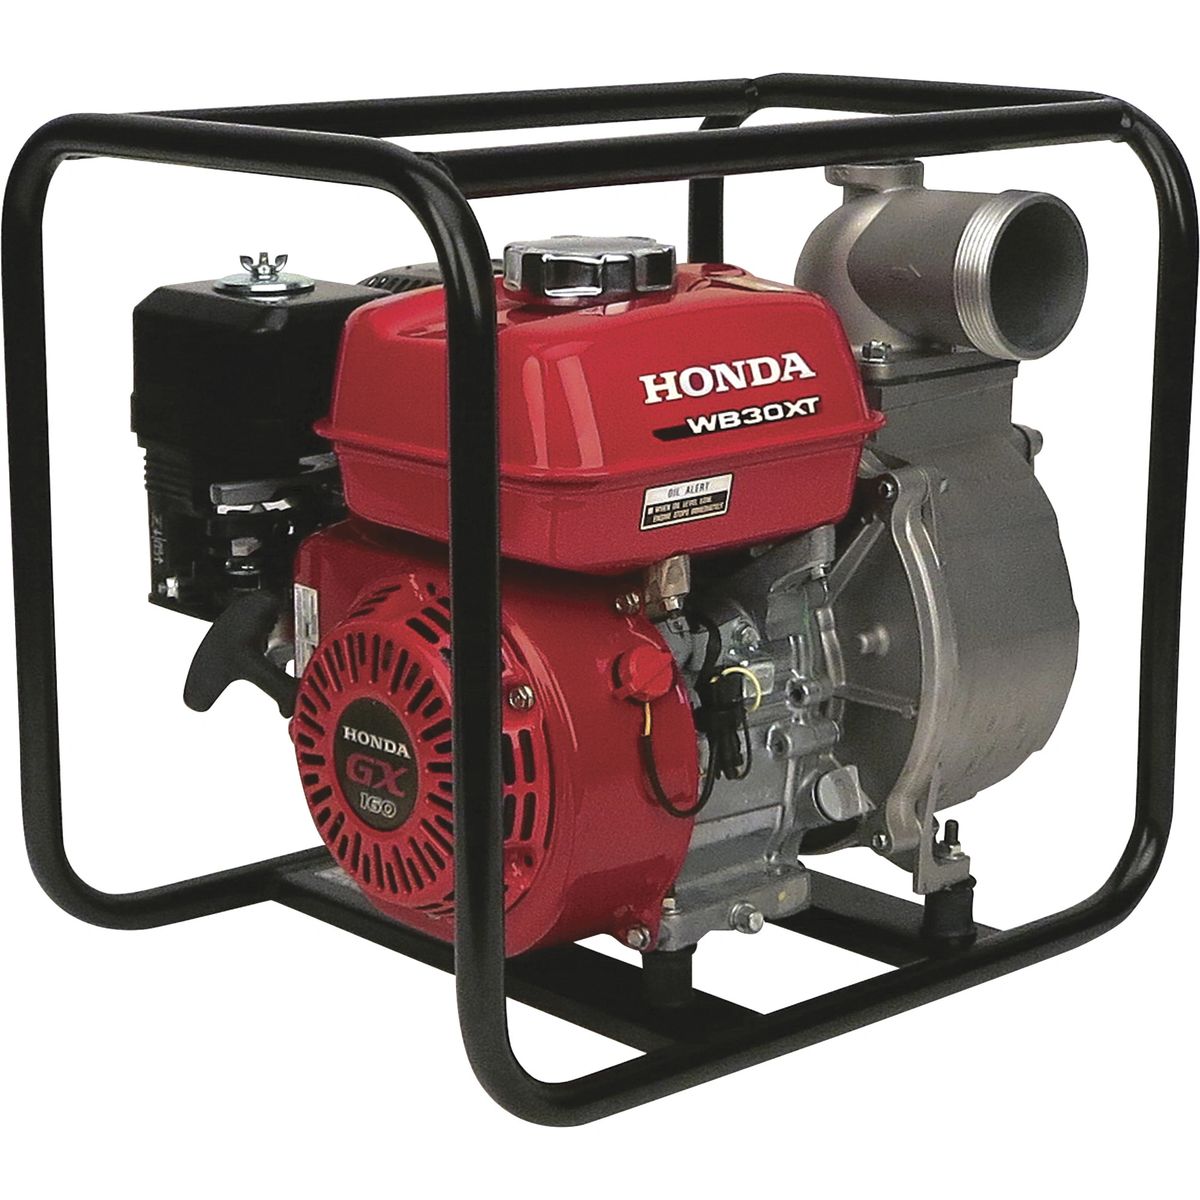 Portable Water Pump Kit - 120cc Honda GX120 Engine with transfer Hose